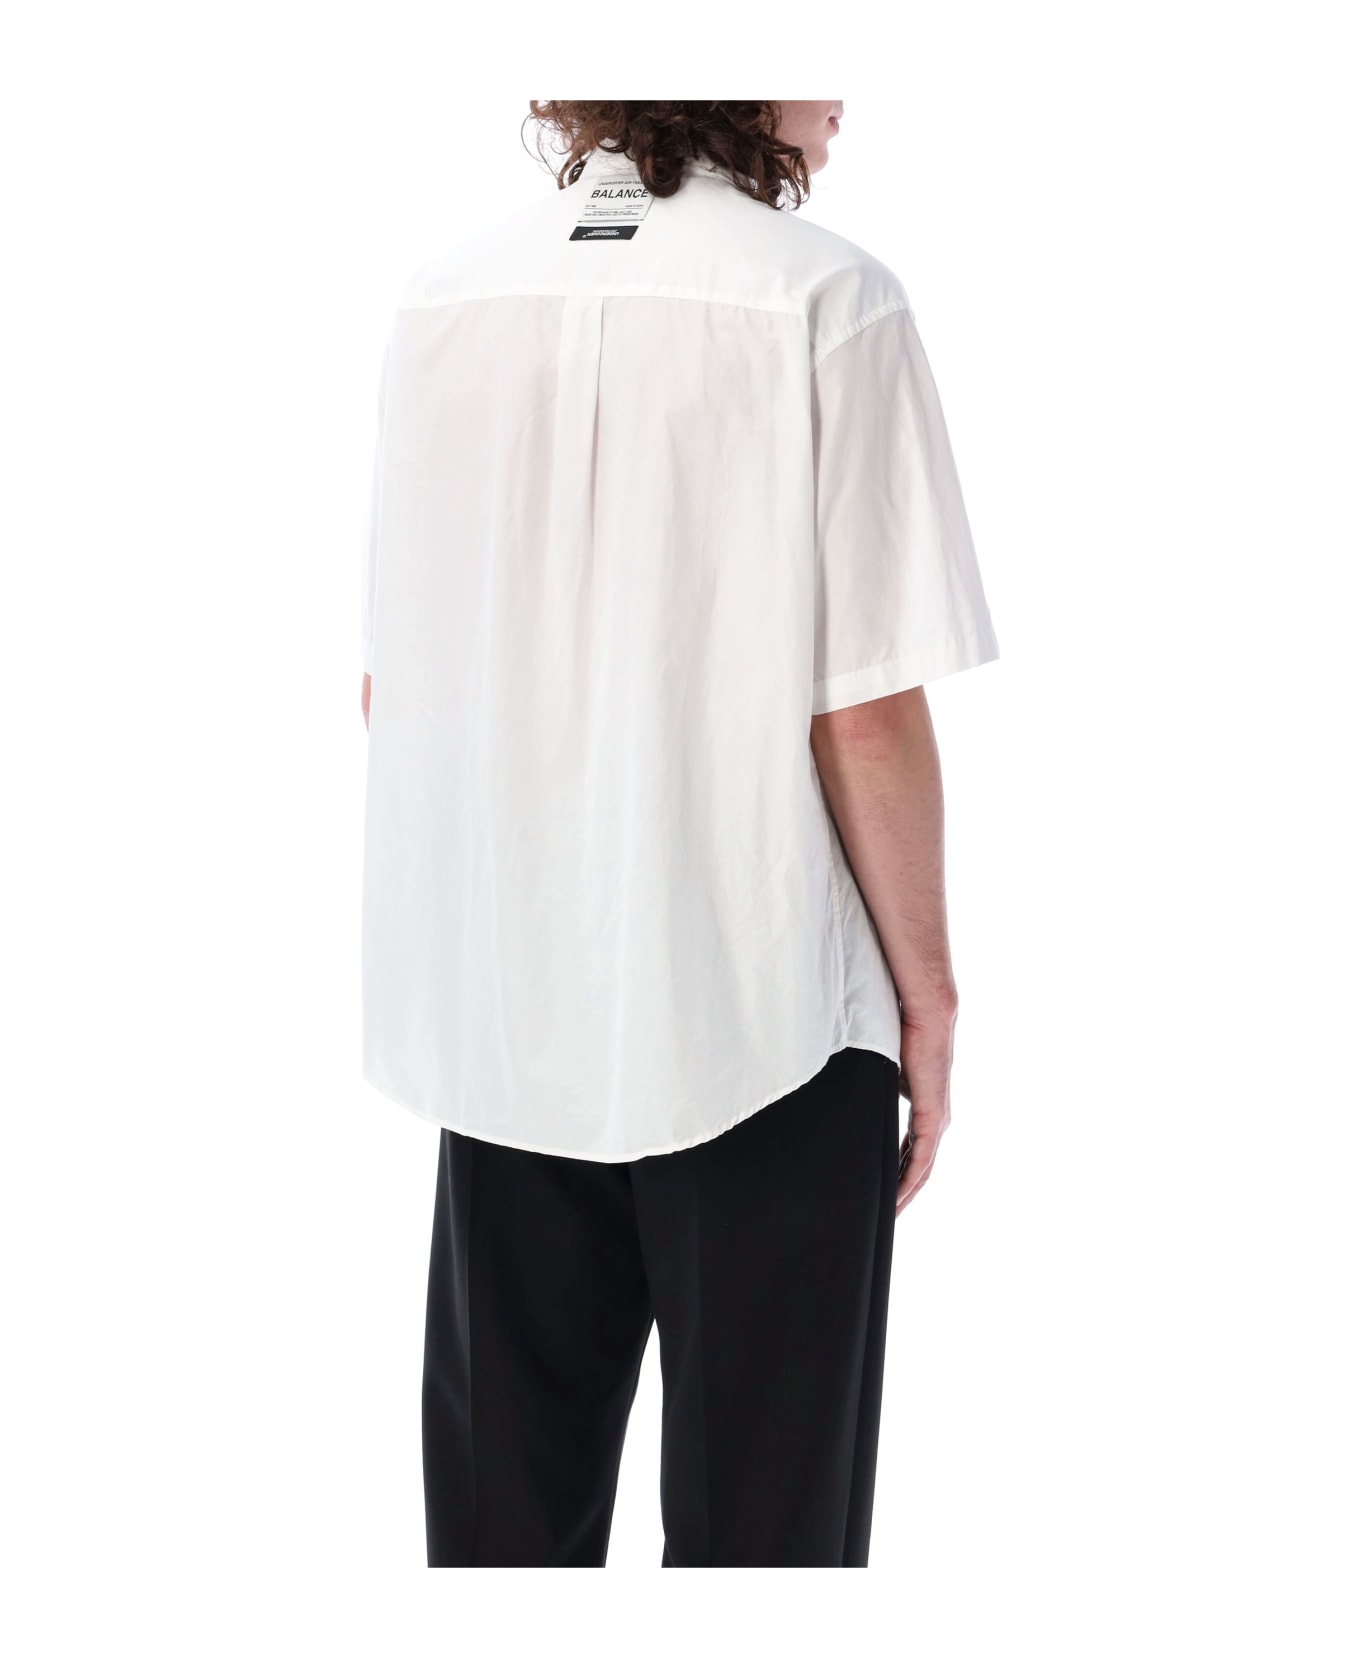 Undercover Jun Takahashi Label S/s Shirt - WHITE シャツ